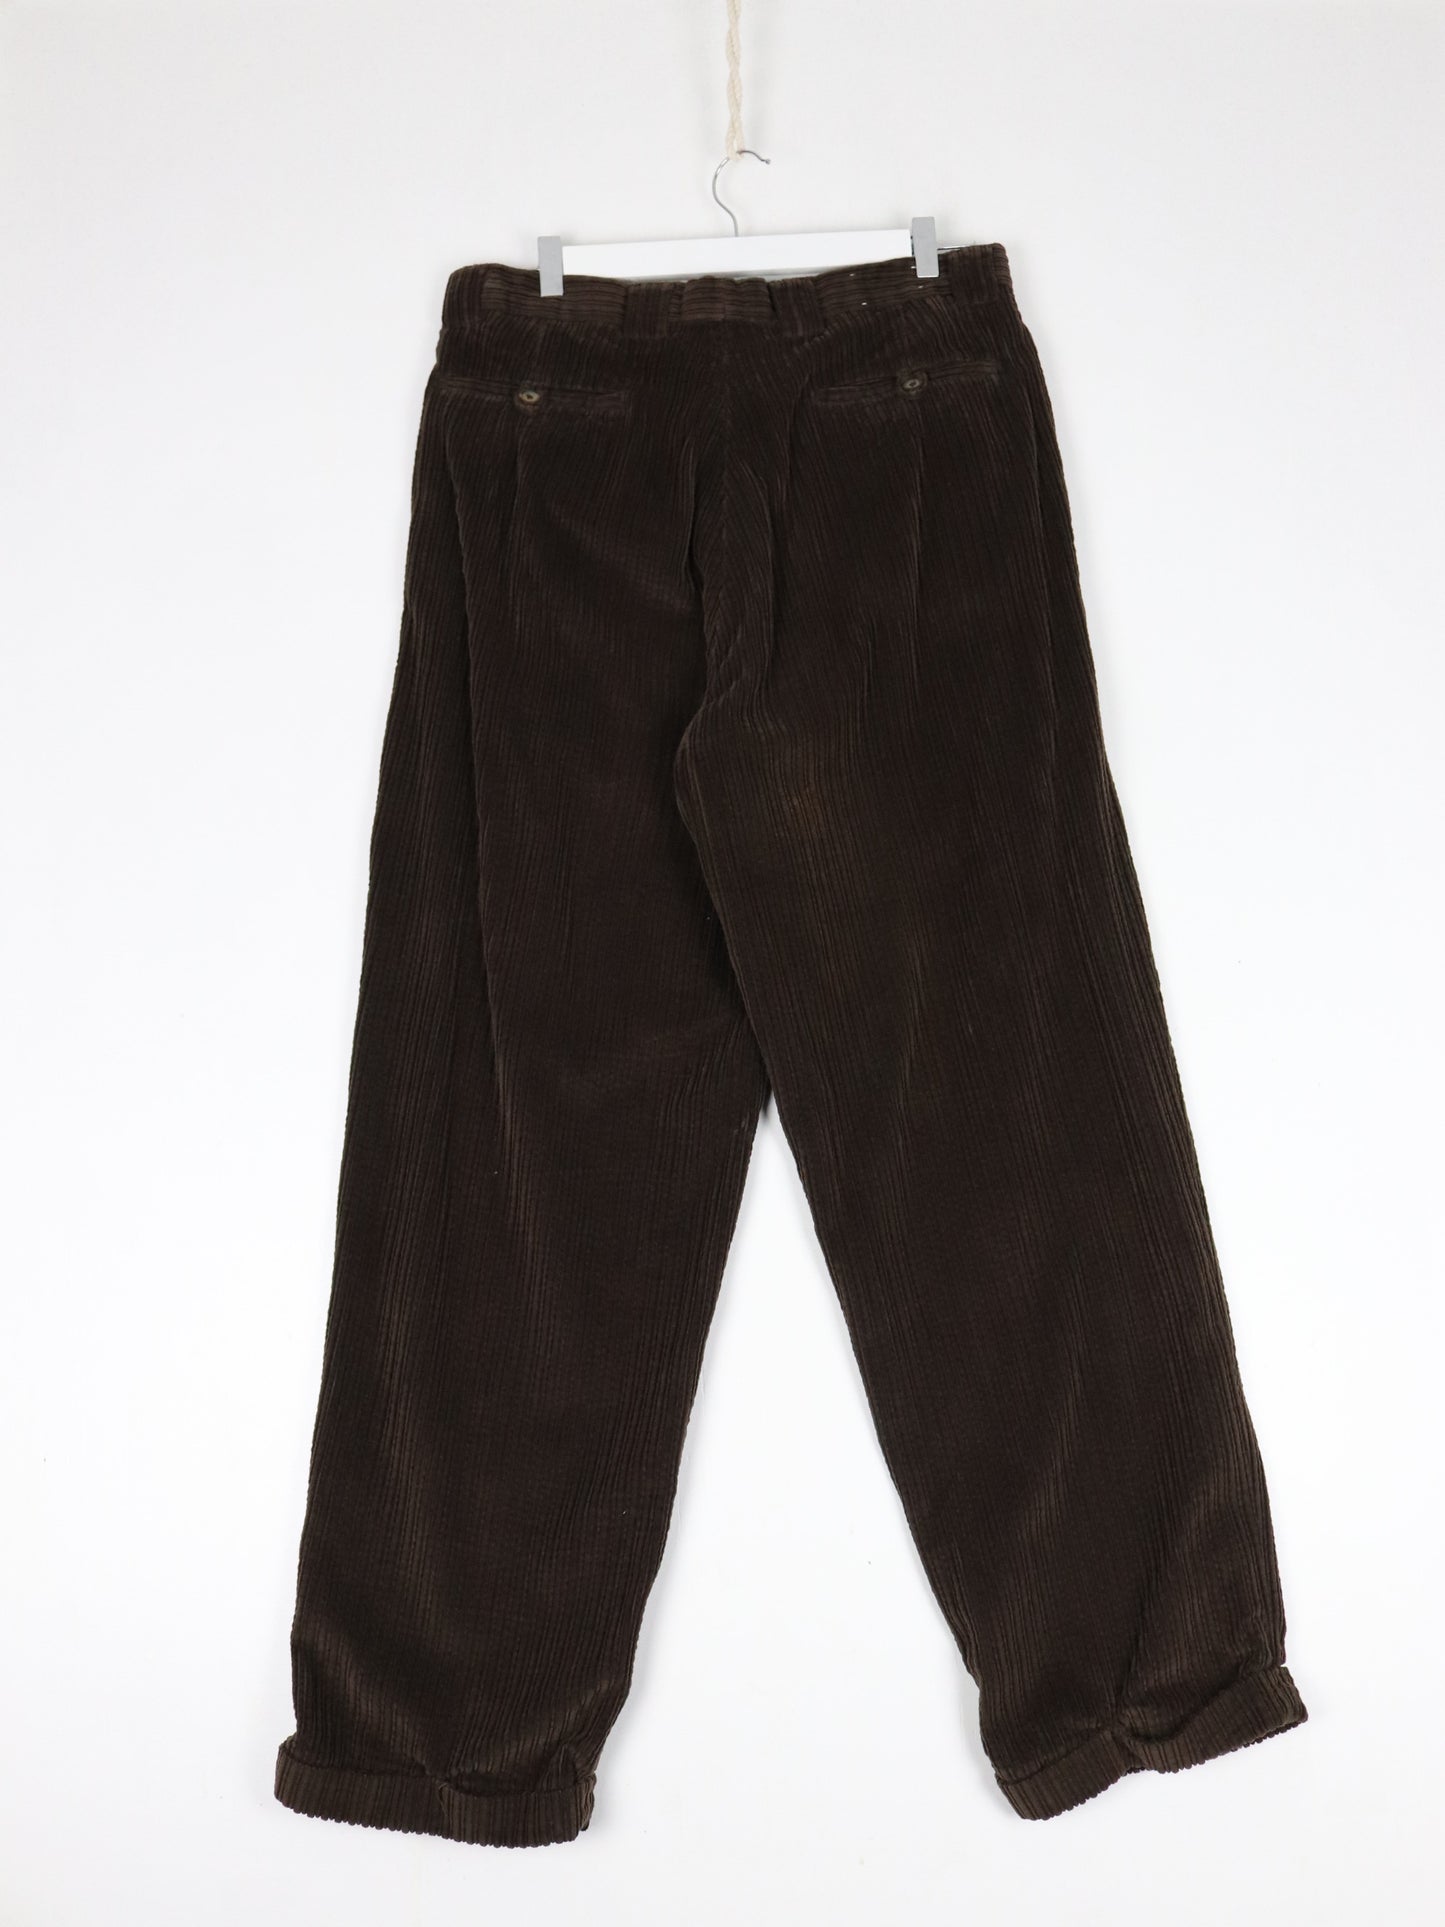 Vintage Henry Grethel Pants Fits Mens 32 x 30 Brown Corduroy Trousers